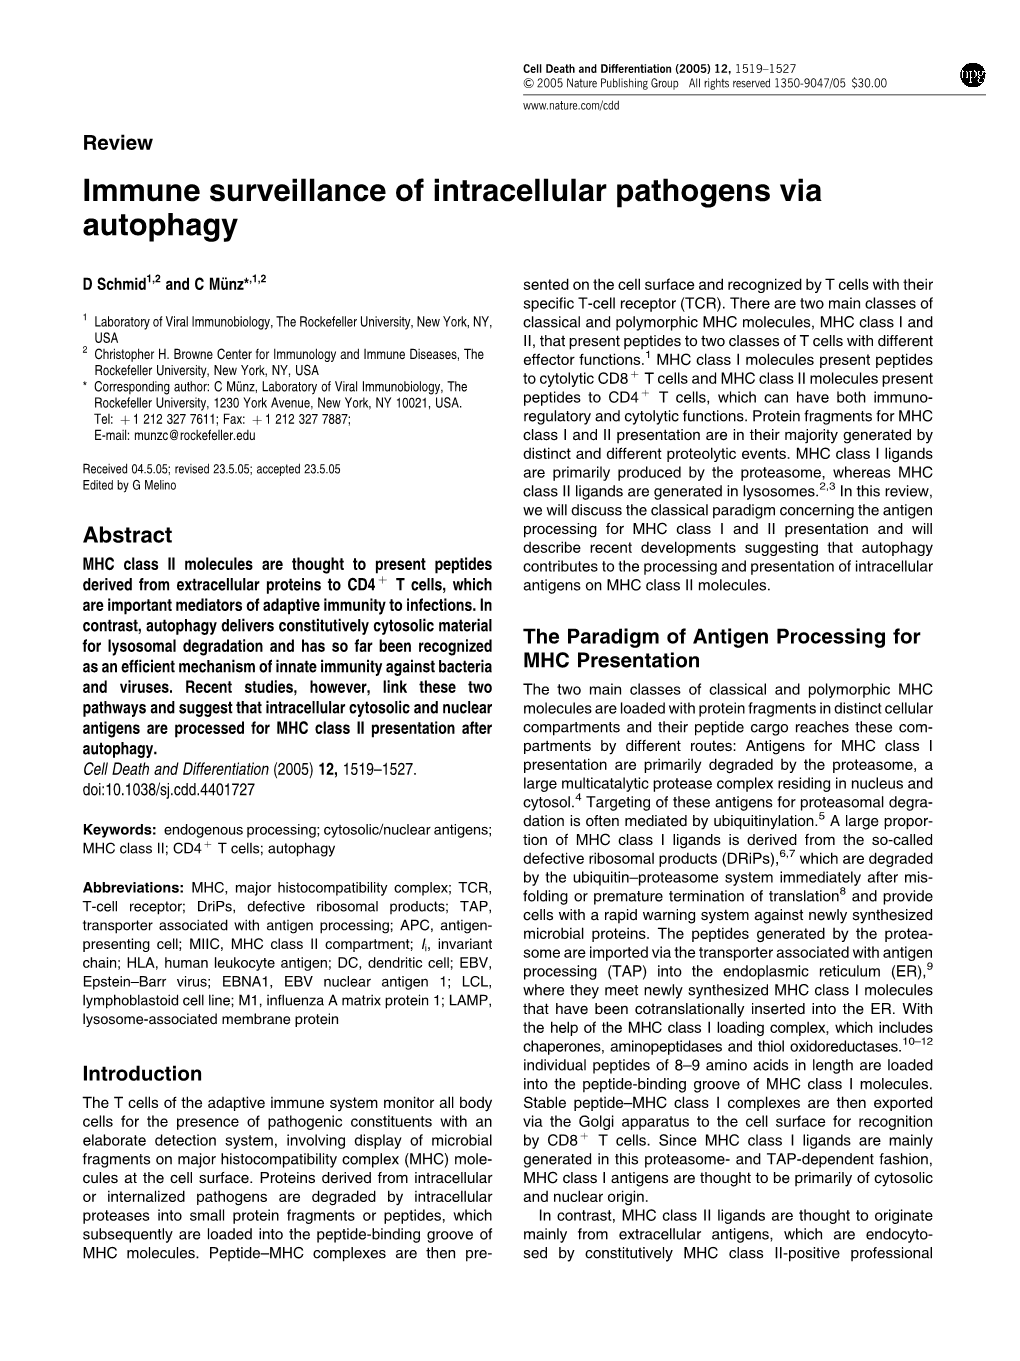 Immune Surveillance of Intracellular Pathogens Via Autophagy